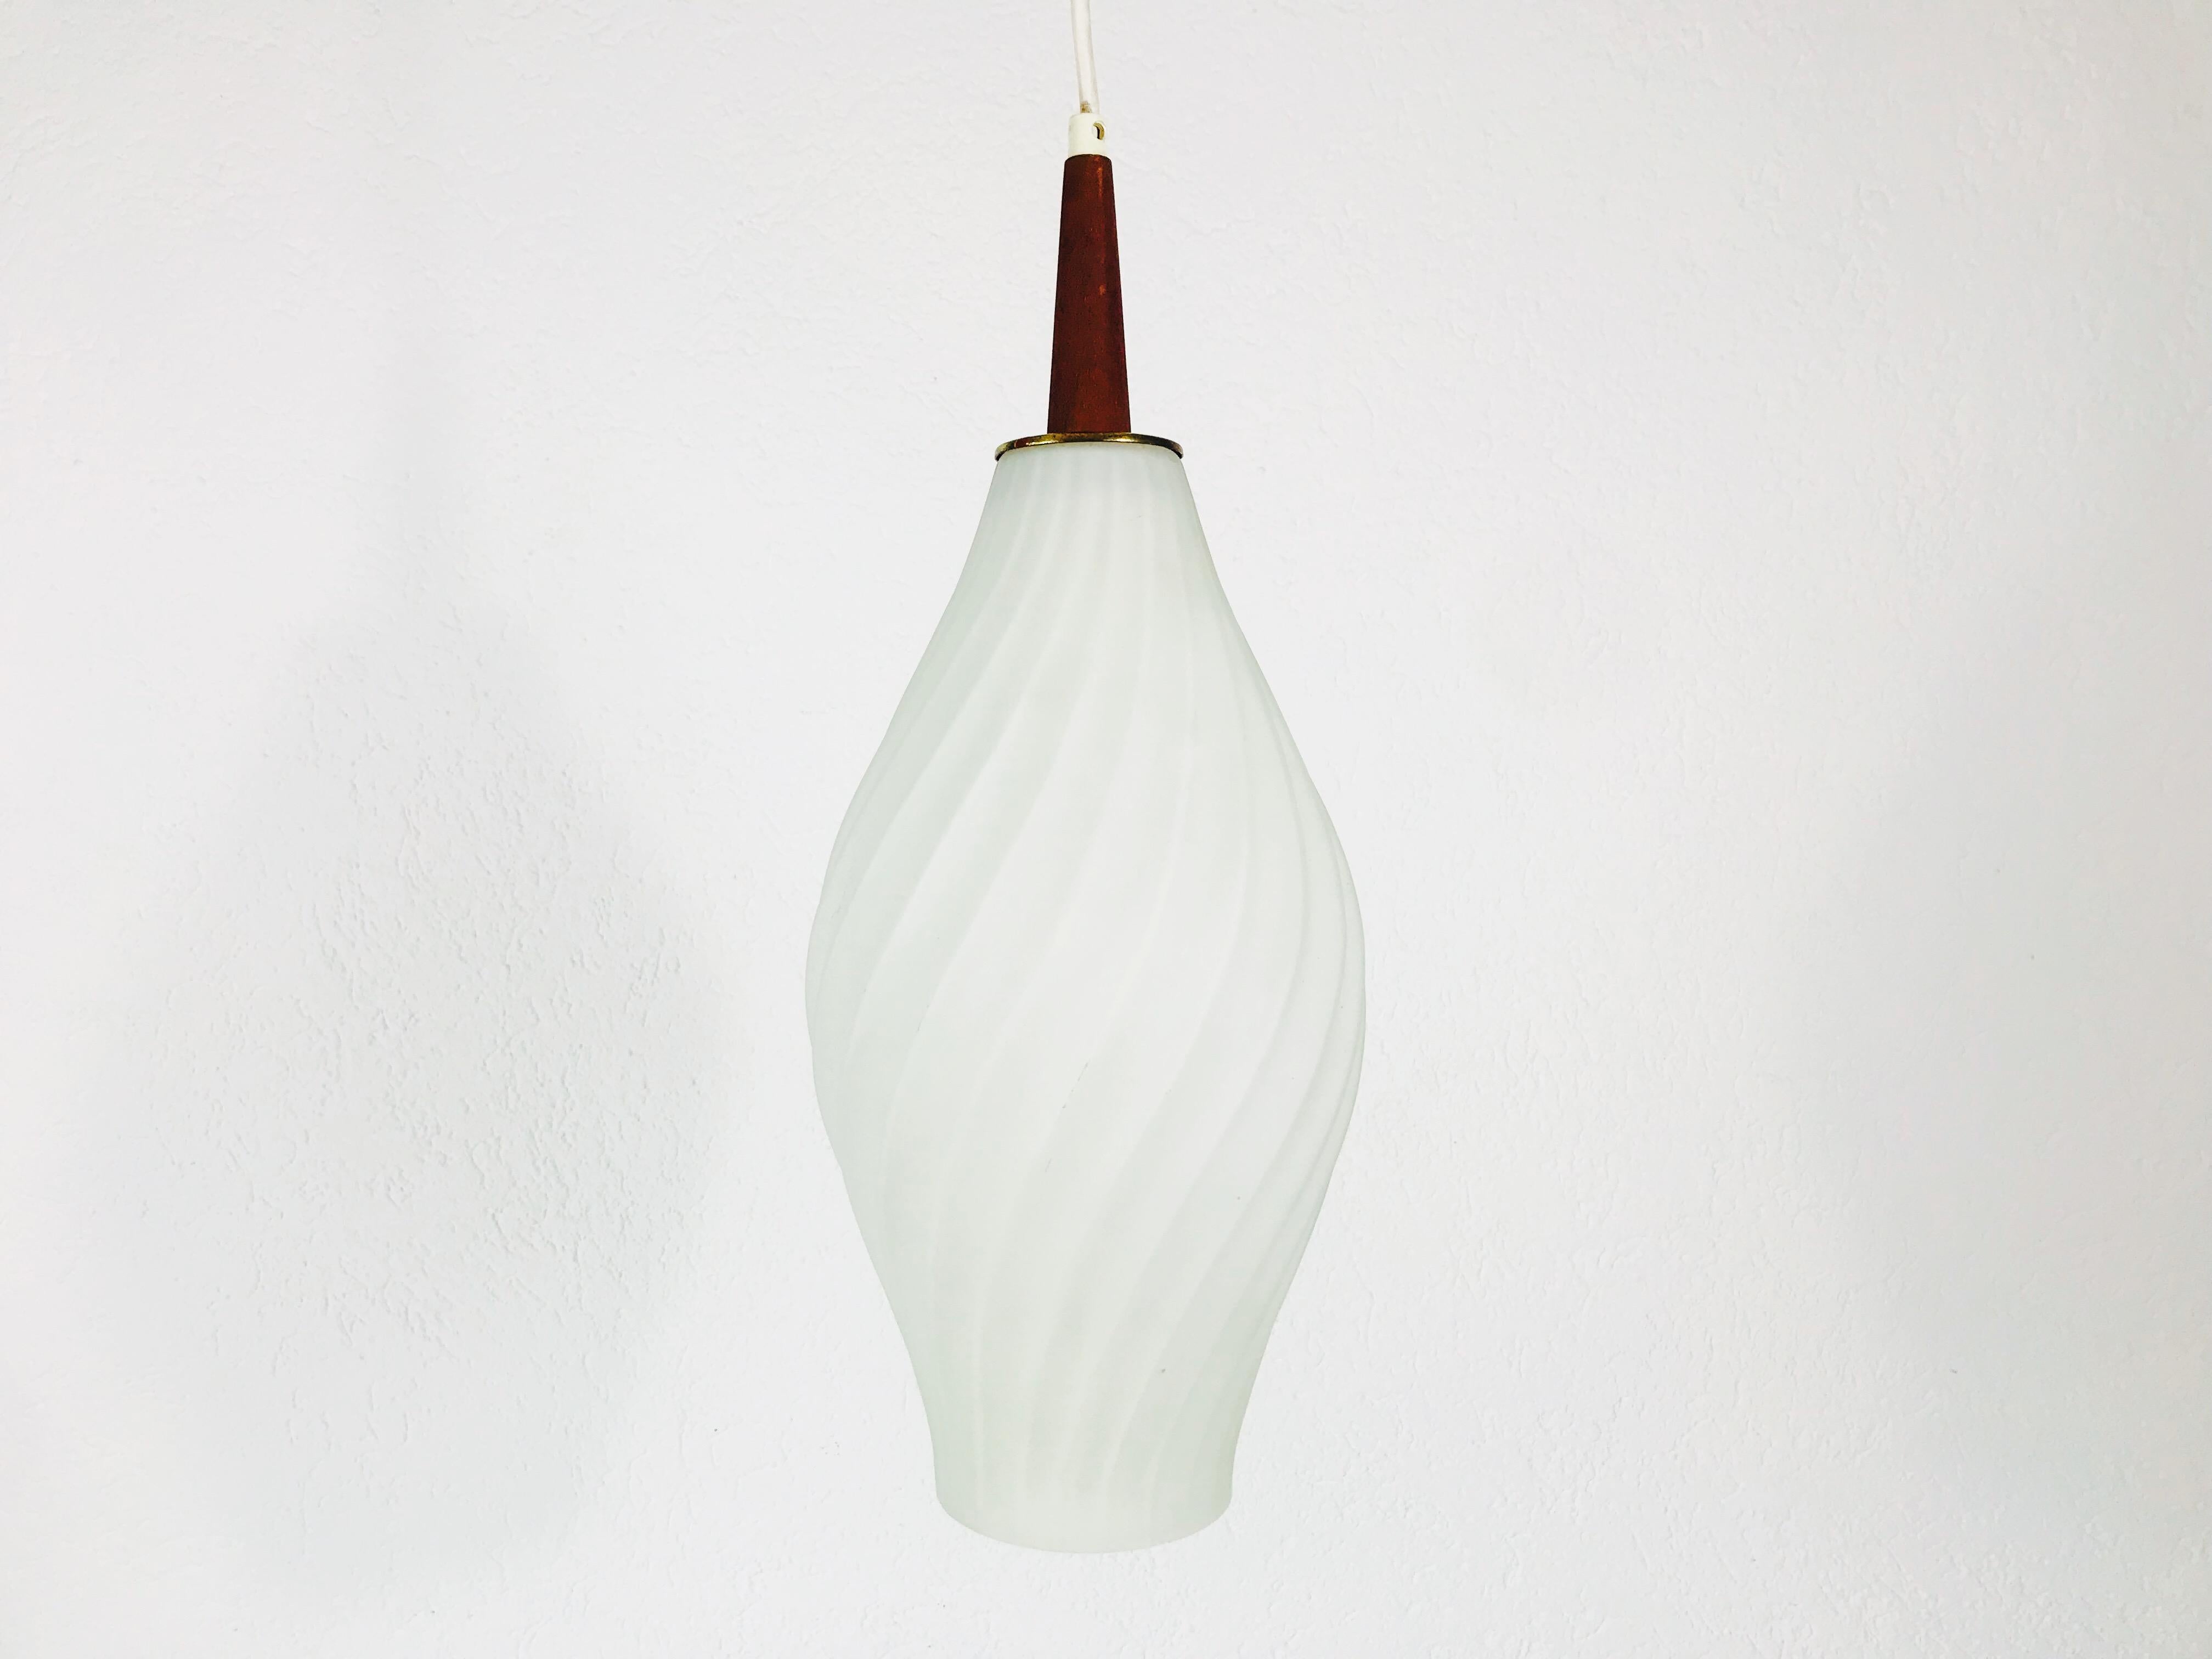 German Midcentury Teak and Opaline Glass Pendant Lamp, 1960s